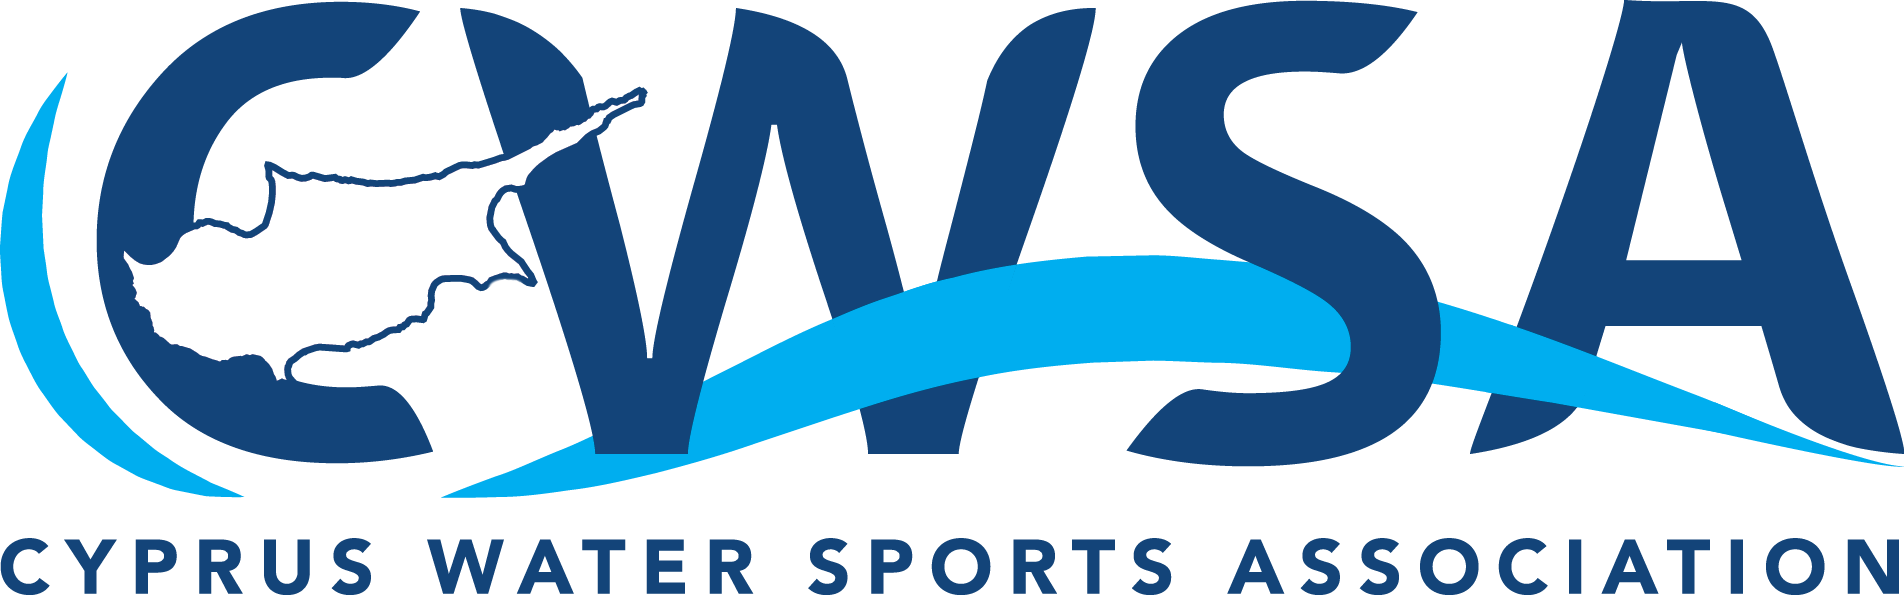 Cyprus Water Sports Association